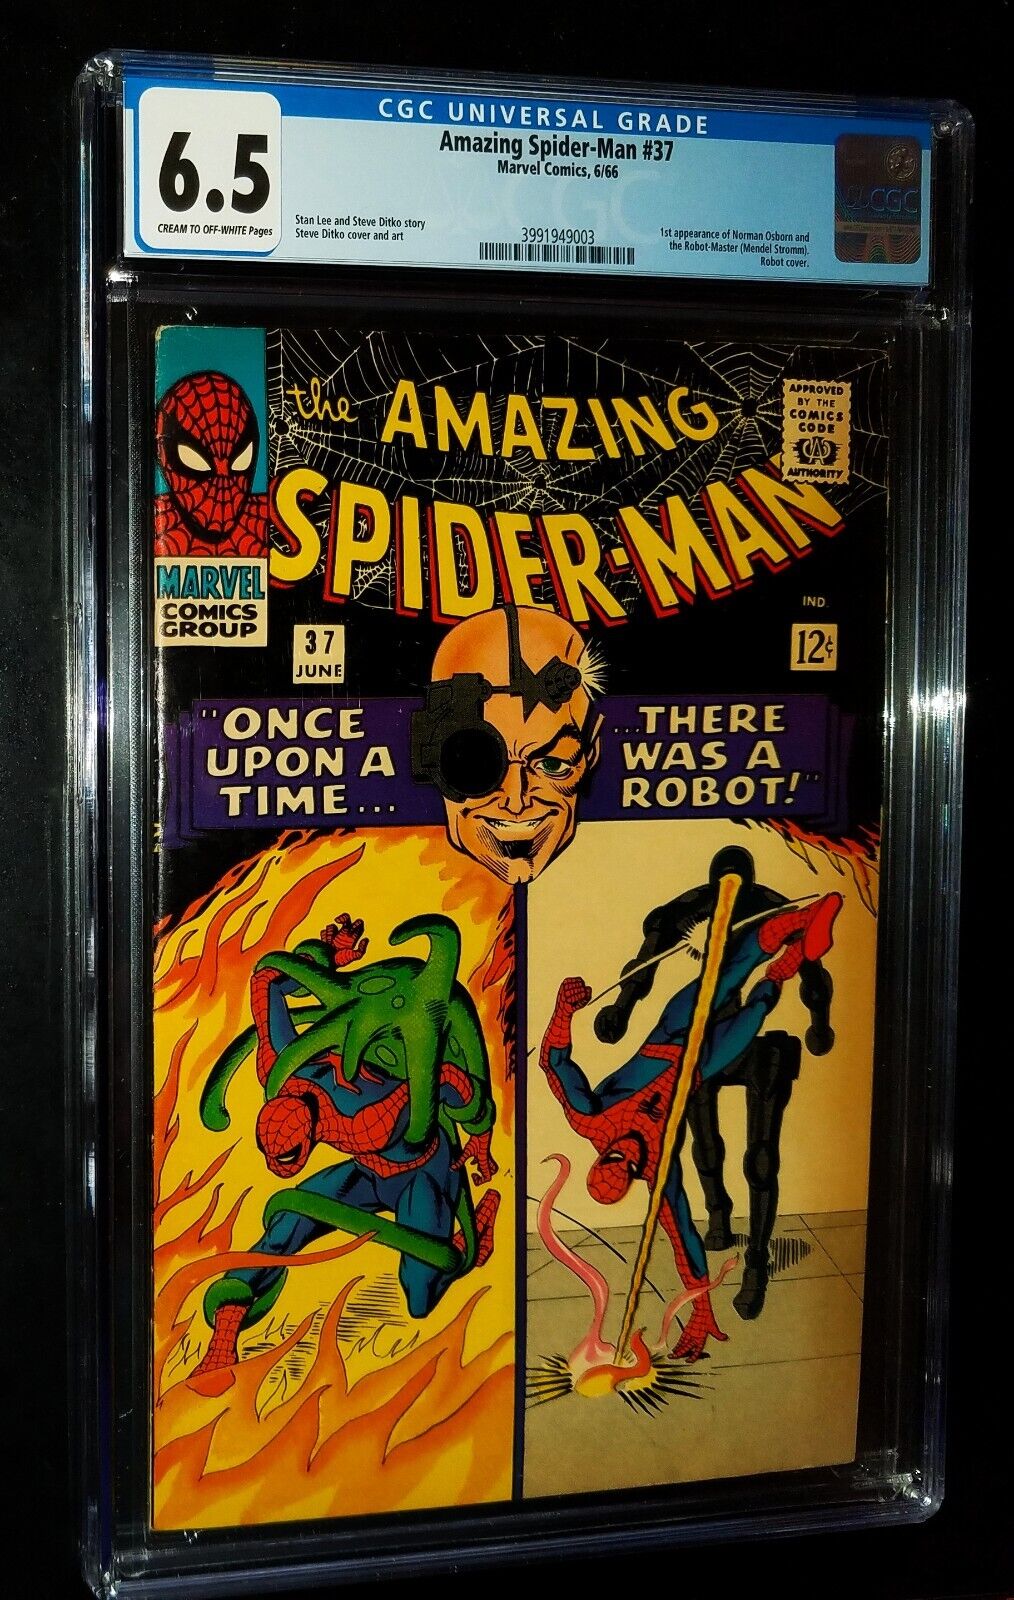 CGC THE AMAZING SPIDER-MAN #37 1966 Marvel Comics CGC 6.5 FN+ KEY ISSUE 06261